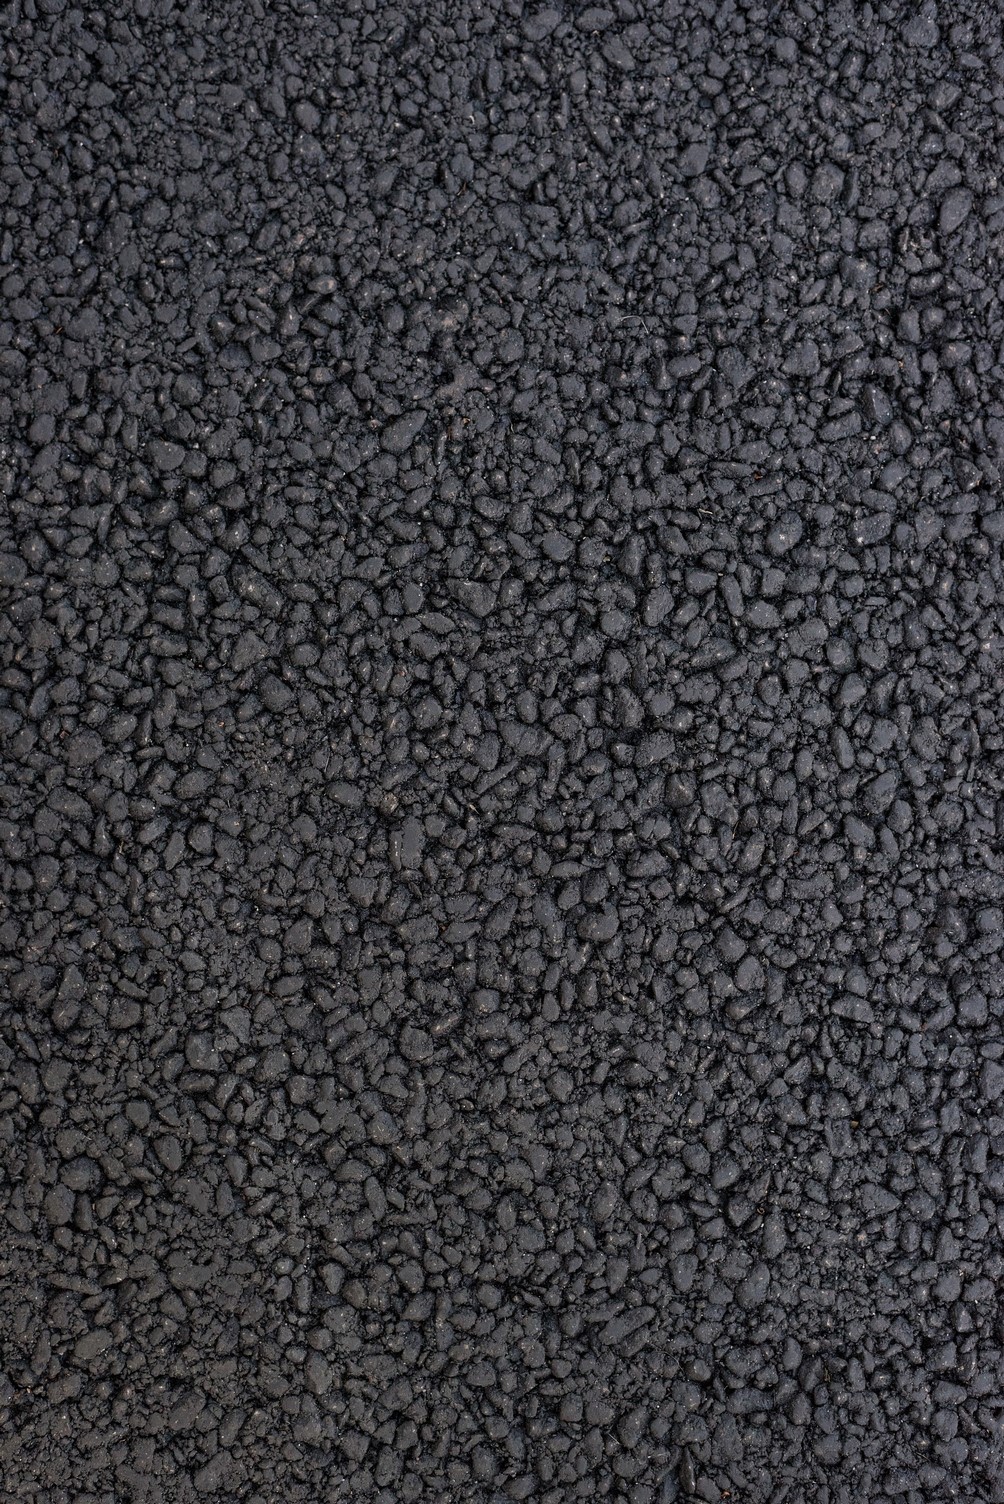 Texture of the black asphalt. Road surface. Close up. Vertical frame